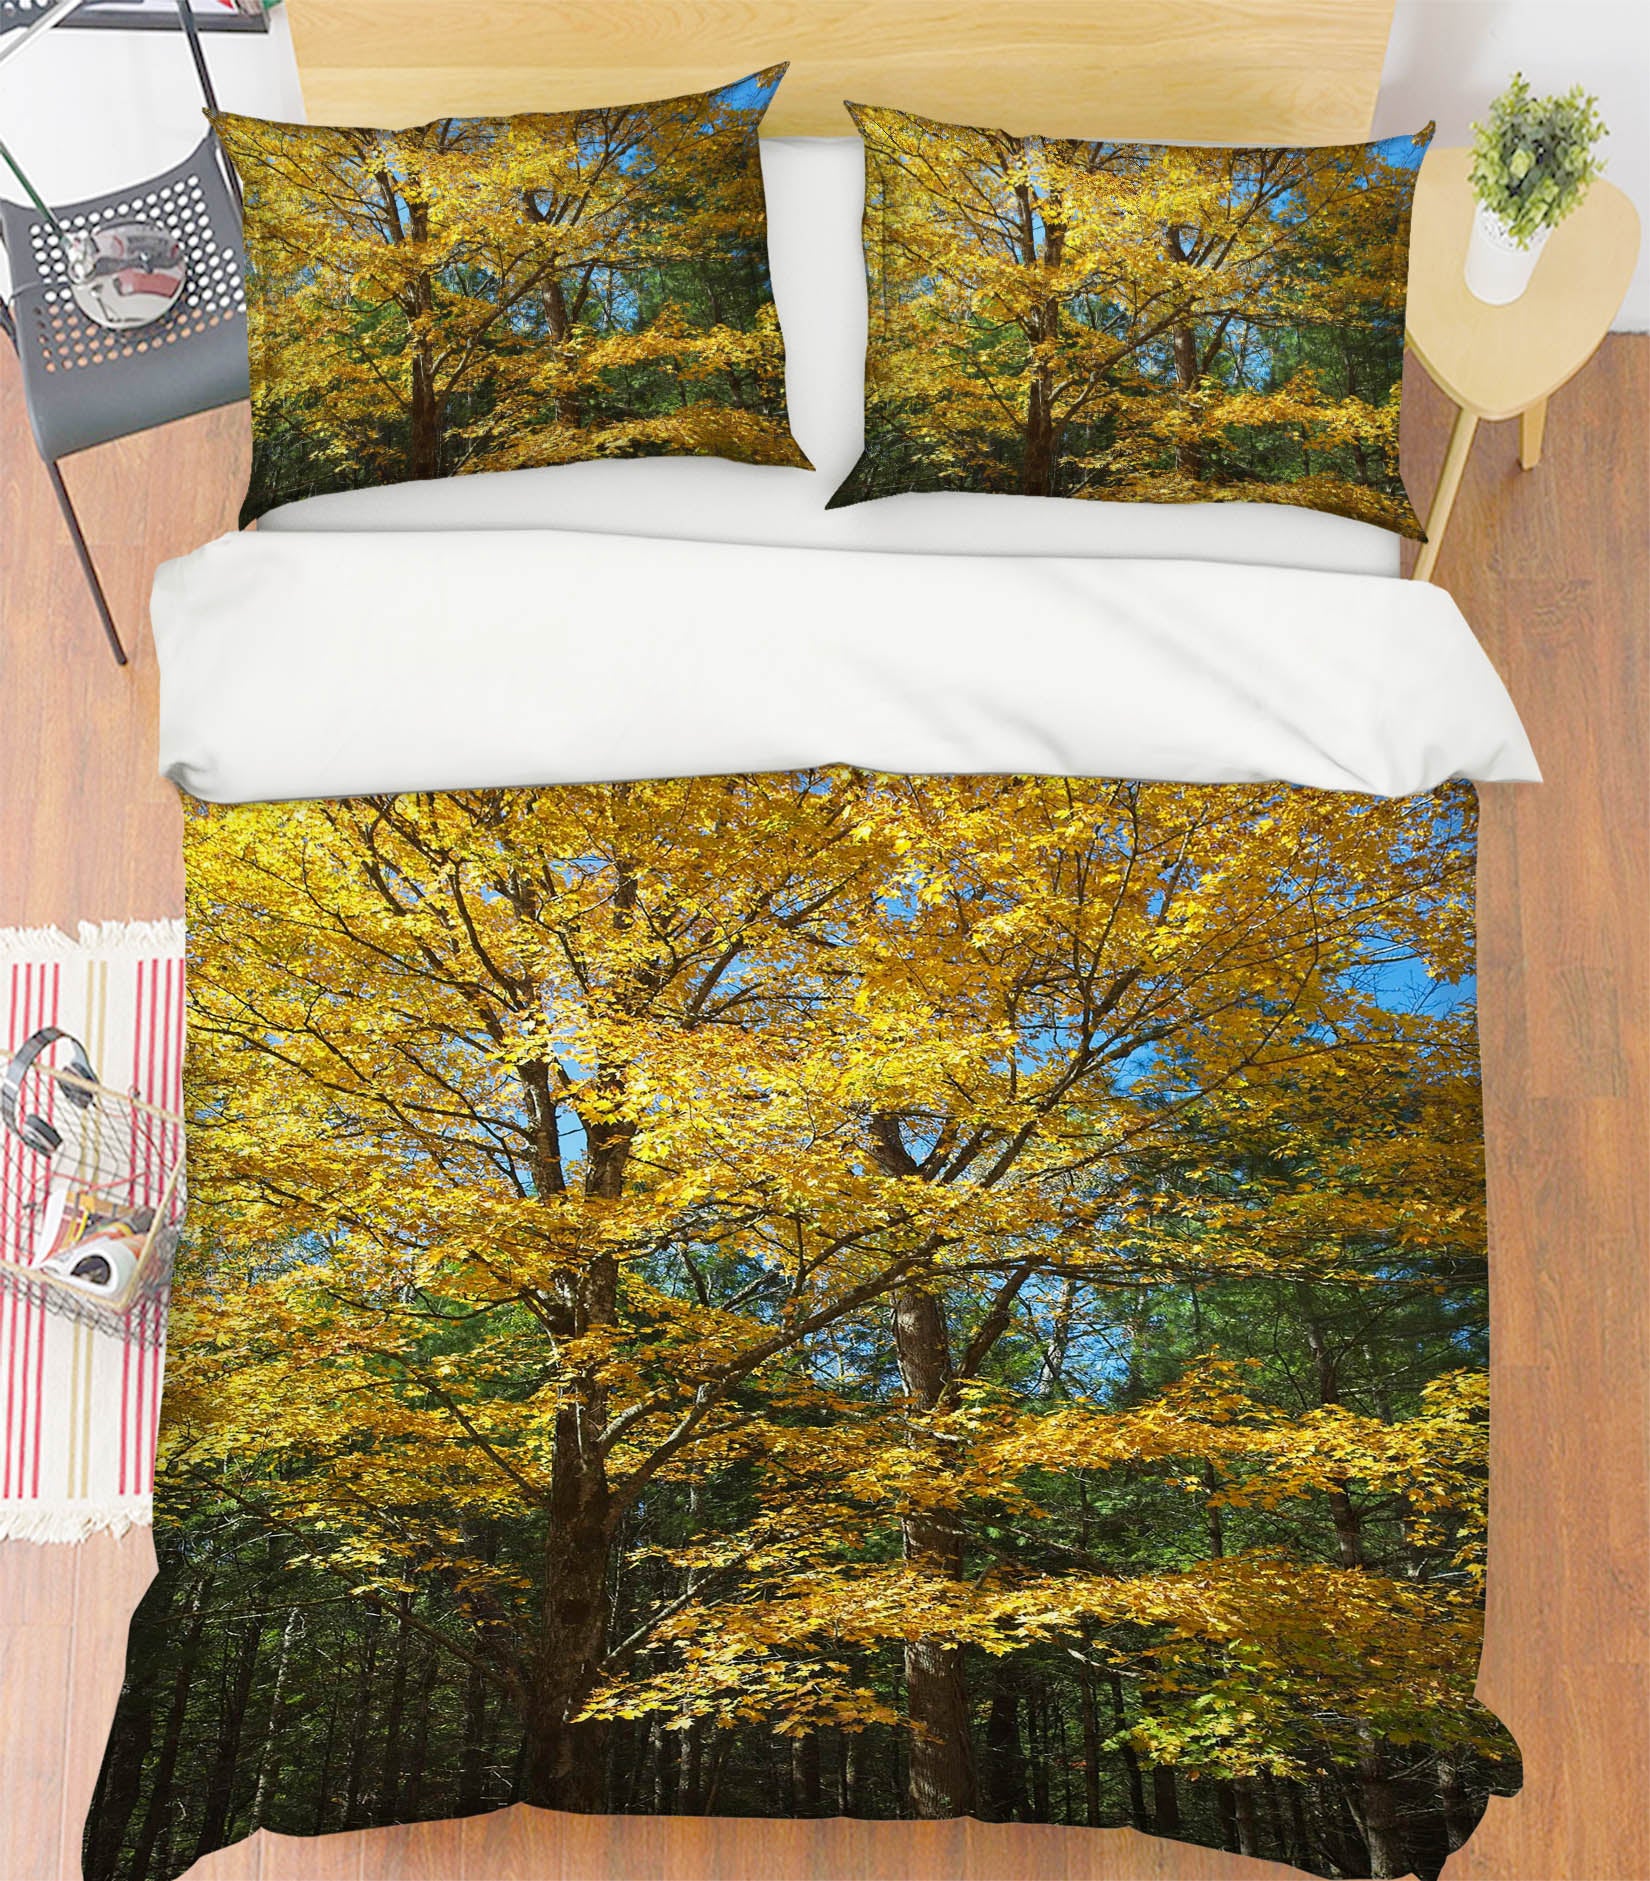 3D Gold Standard 2109 Kathy Barefield Bedding Bed Pillowcases Quilt